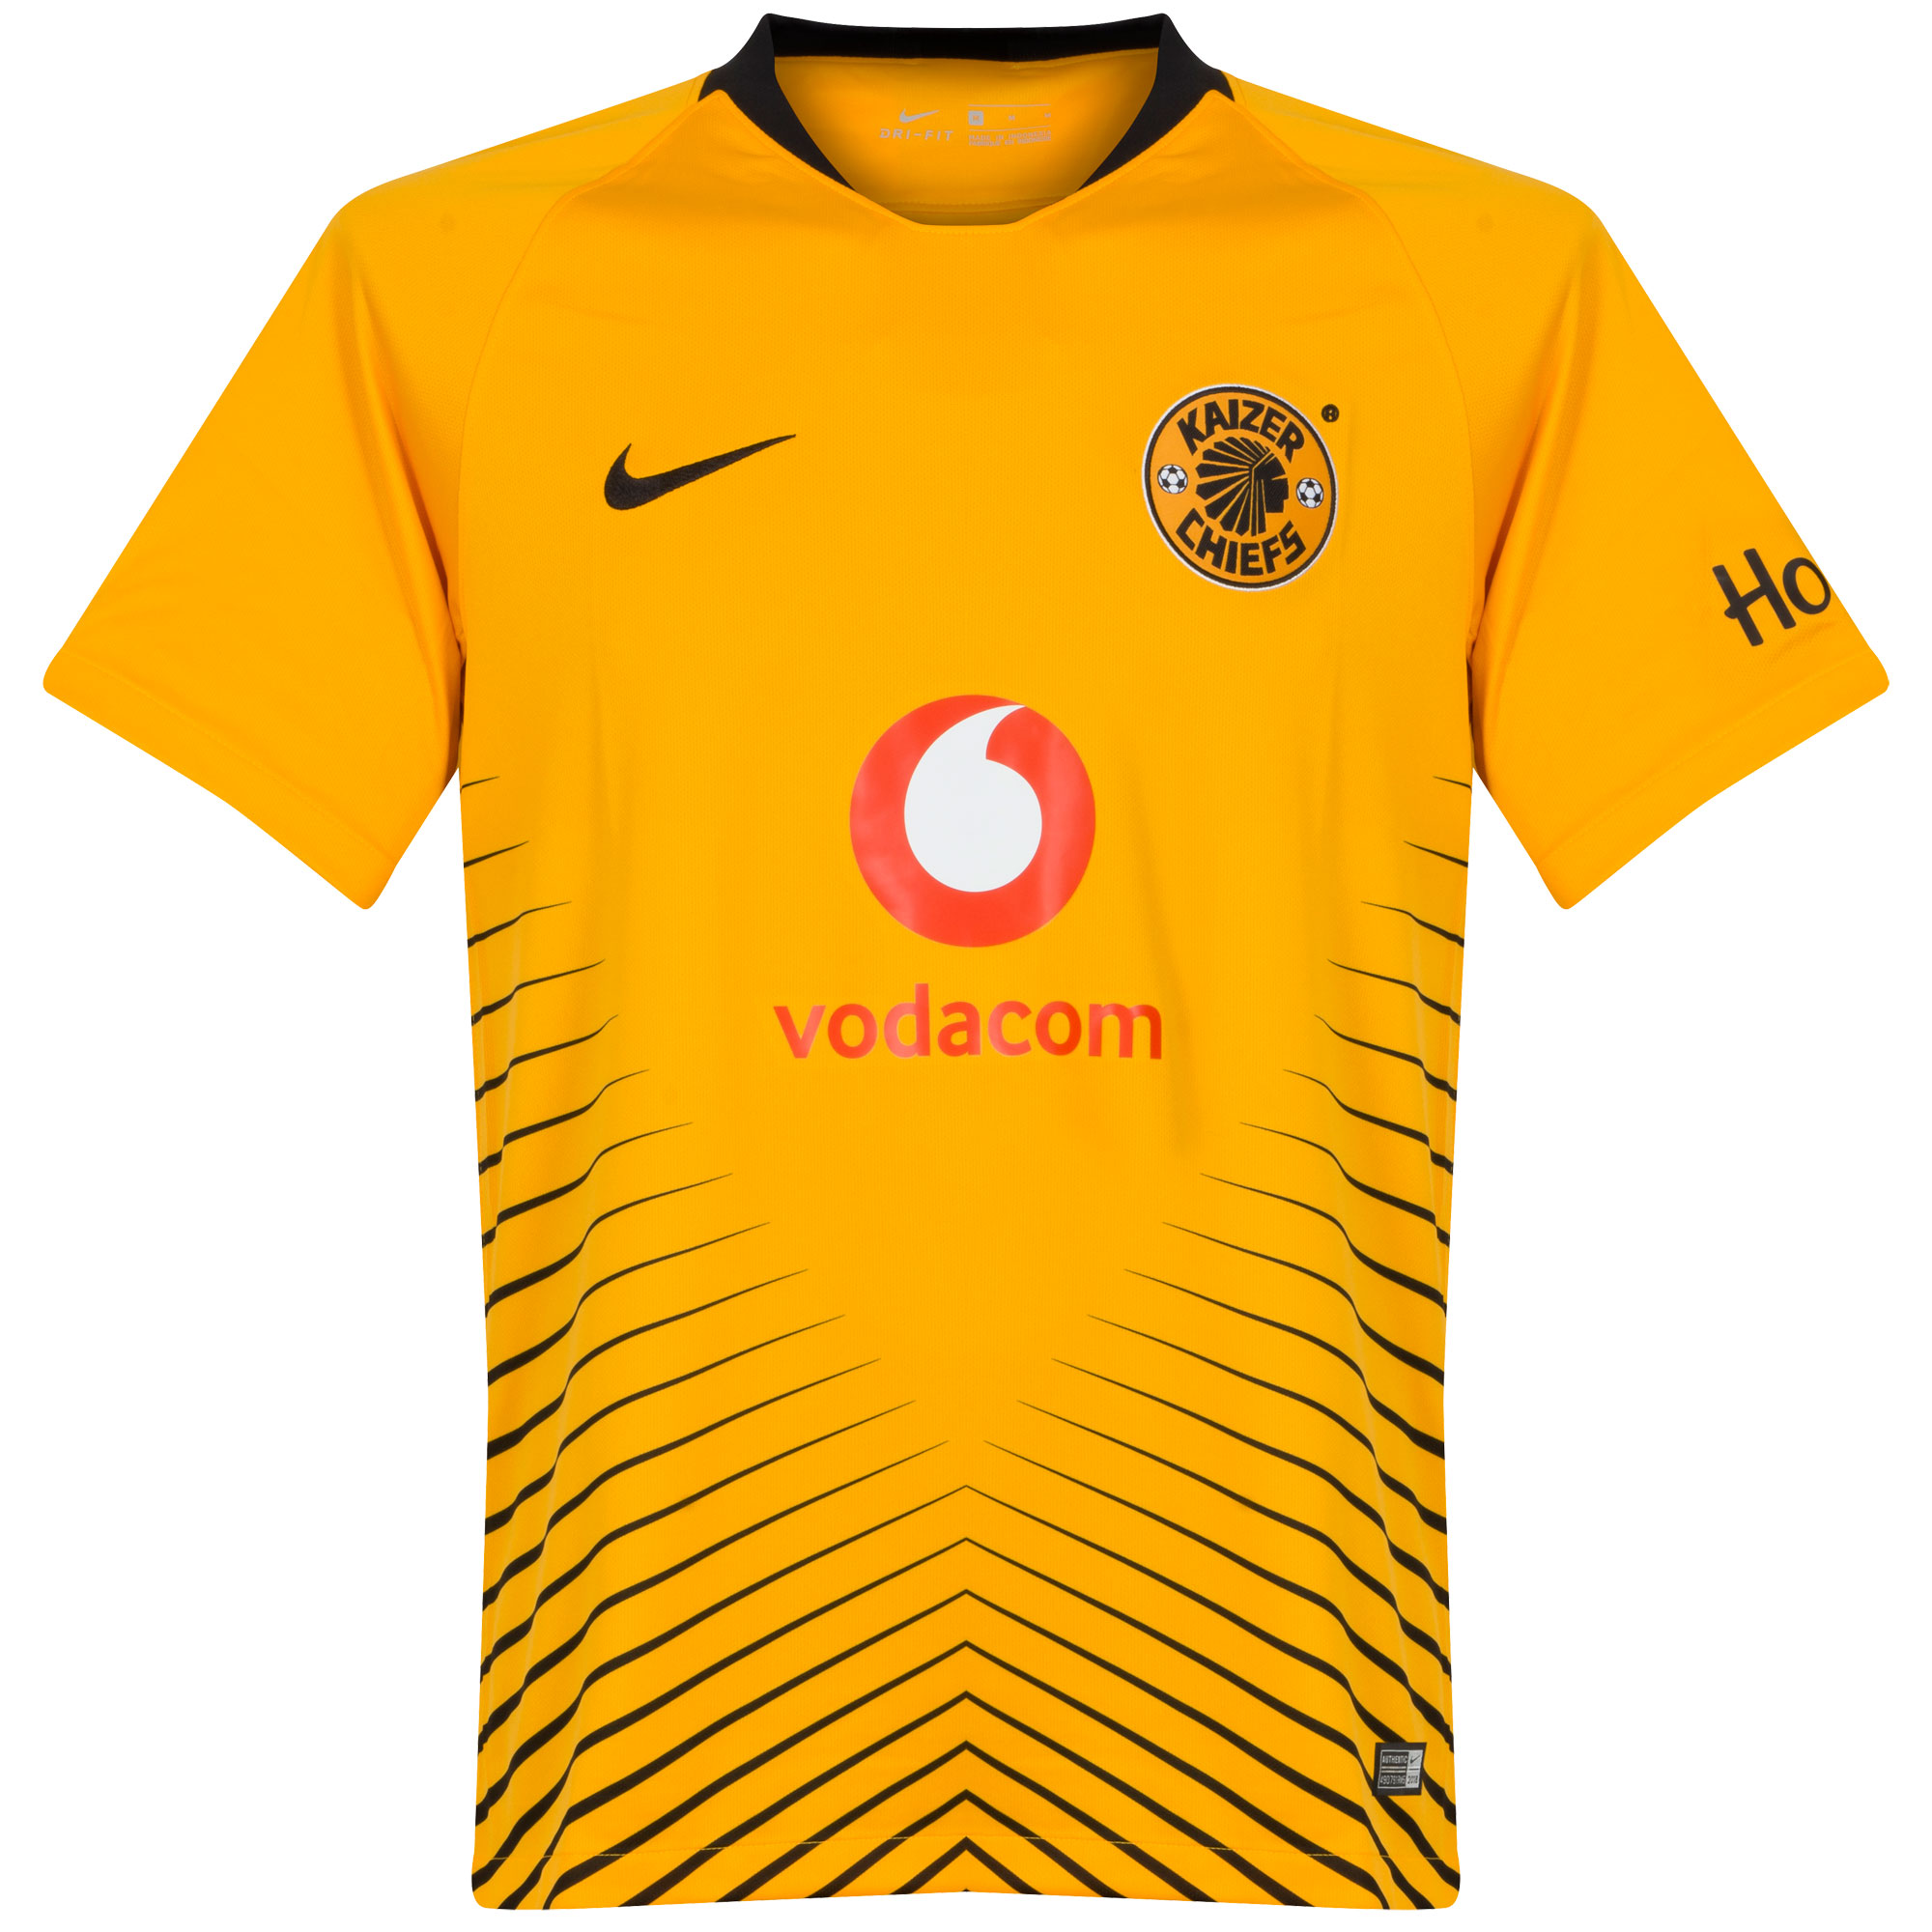 Kaizer Chiefs Home football shirt 2014 - 2015.